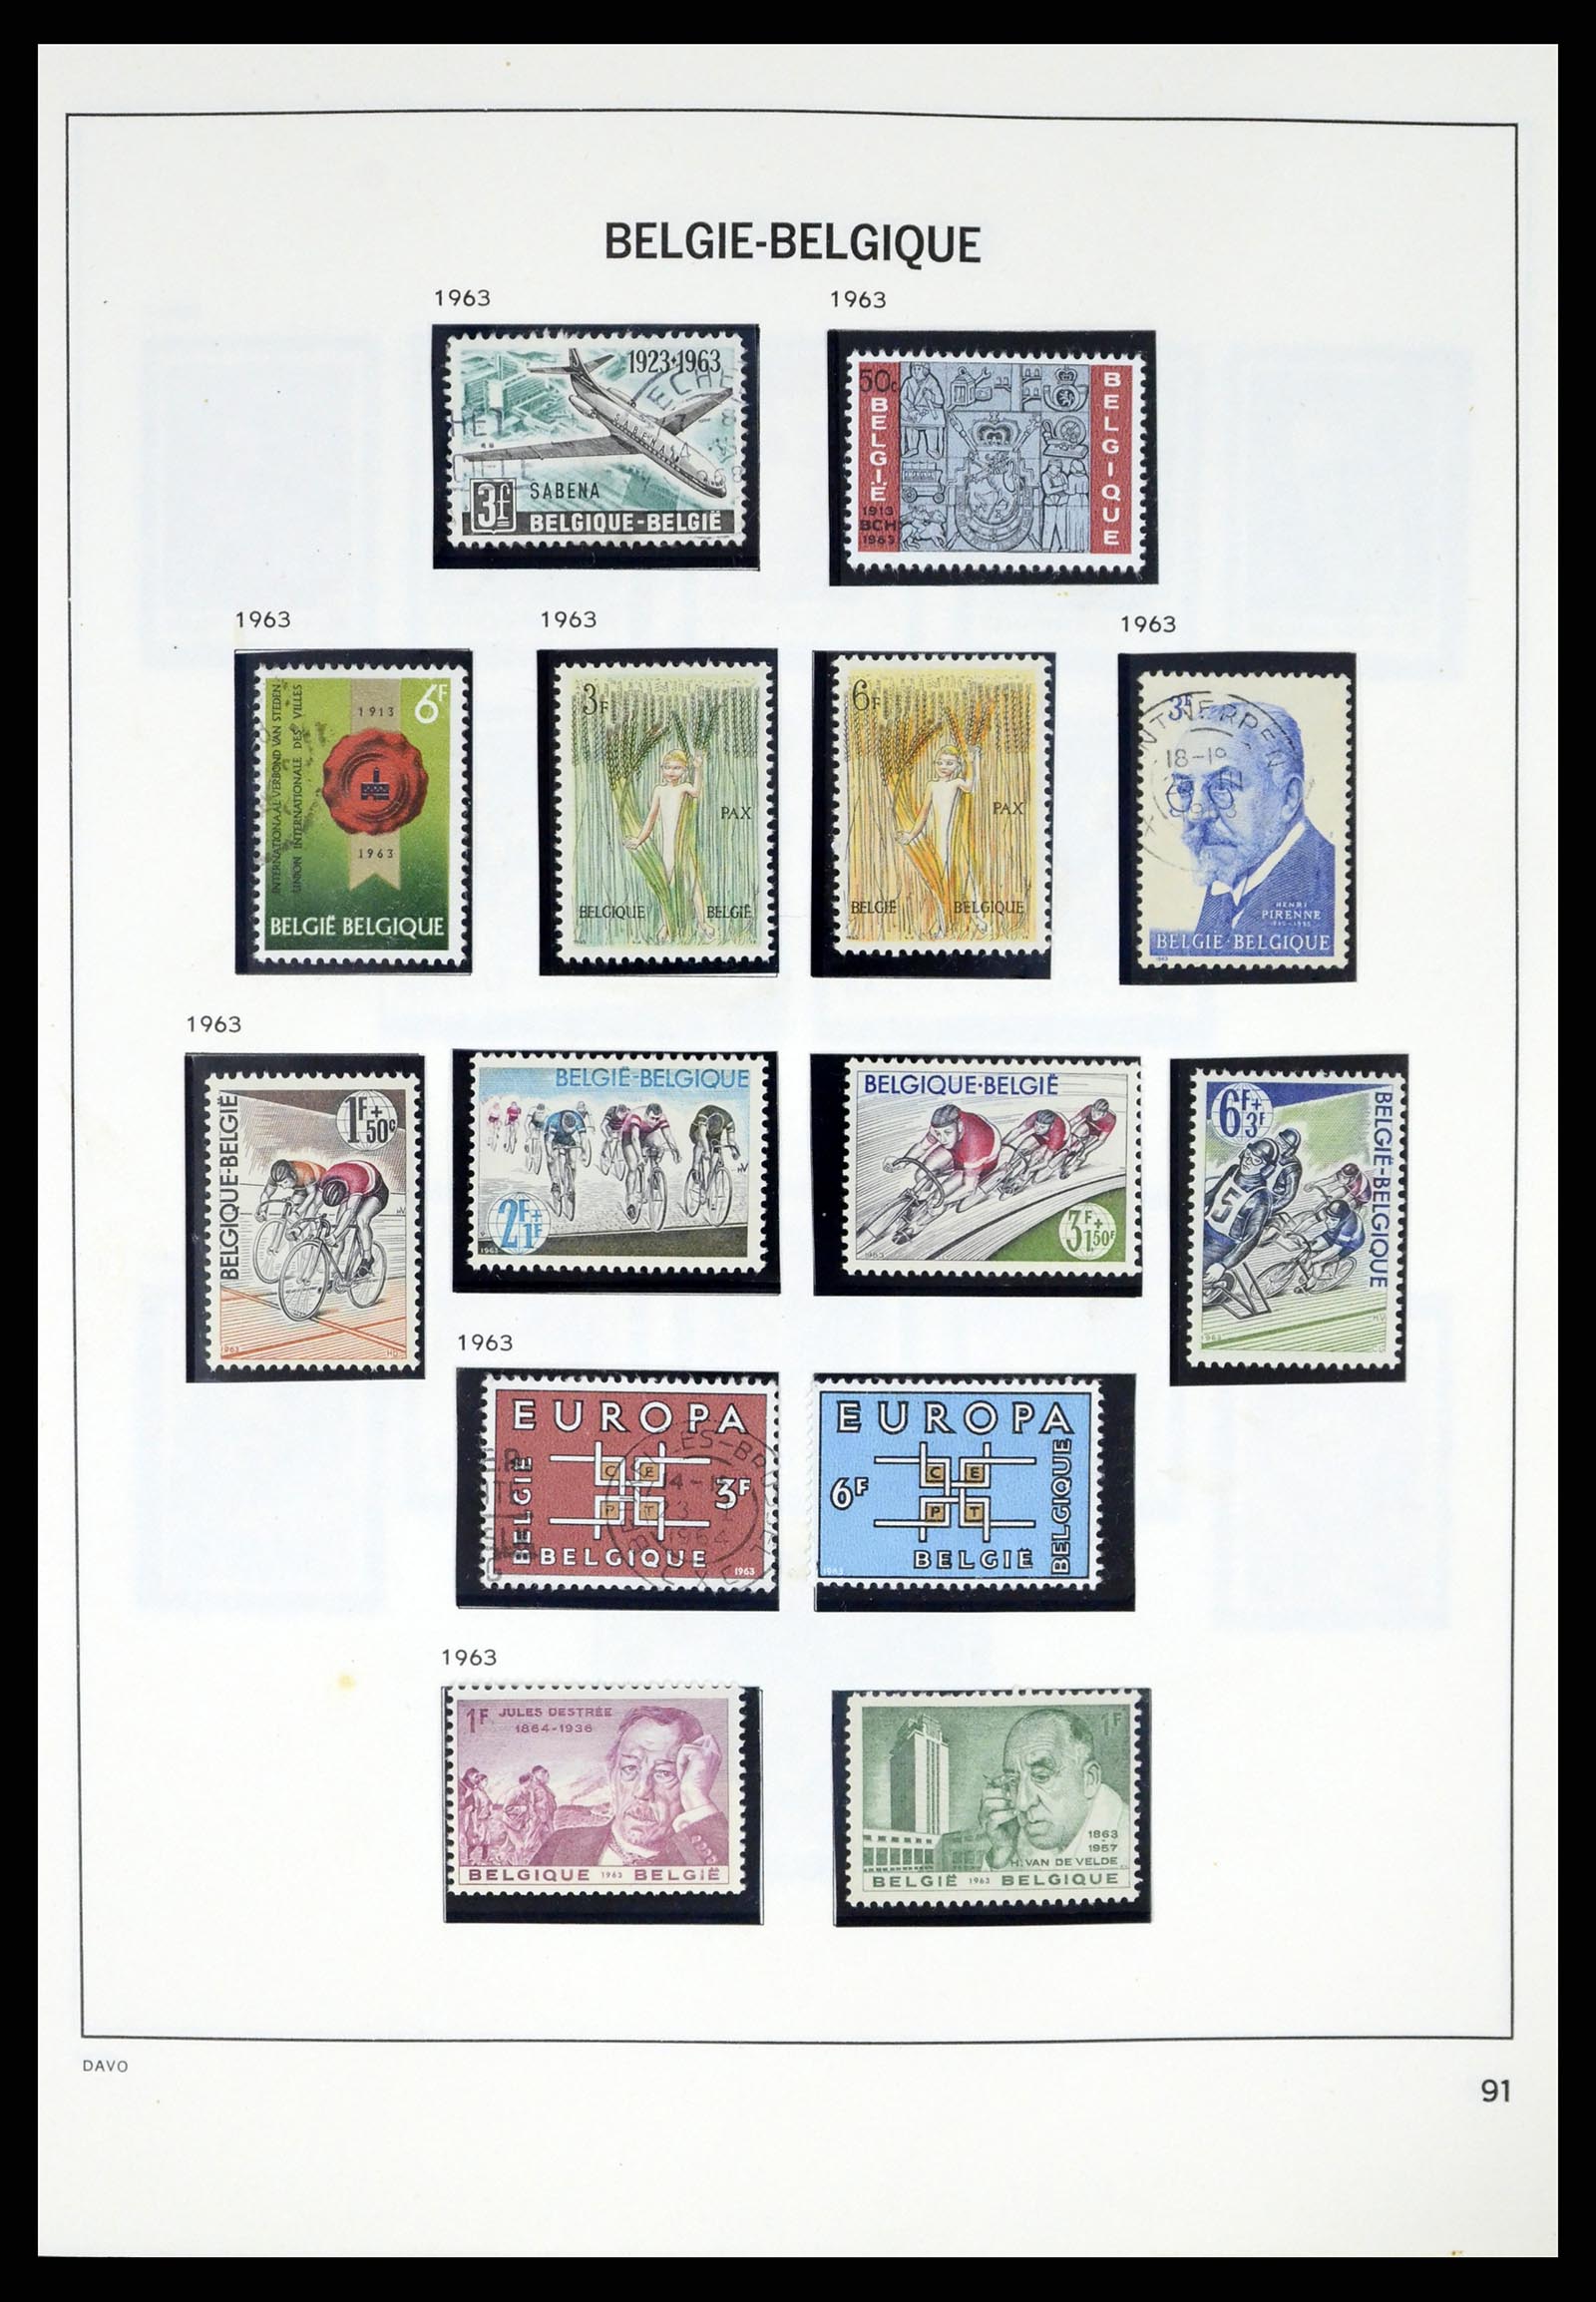 37367 088 - Stamp collection 37367 Belgium 1849-2003.